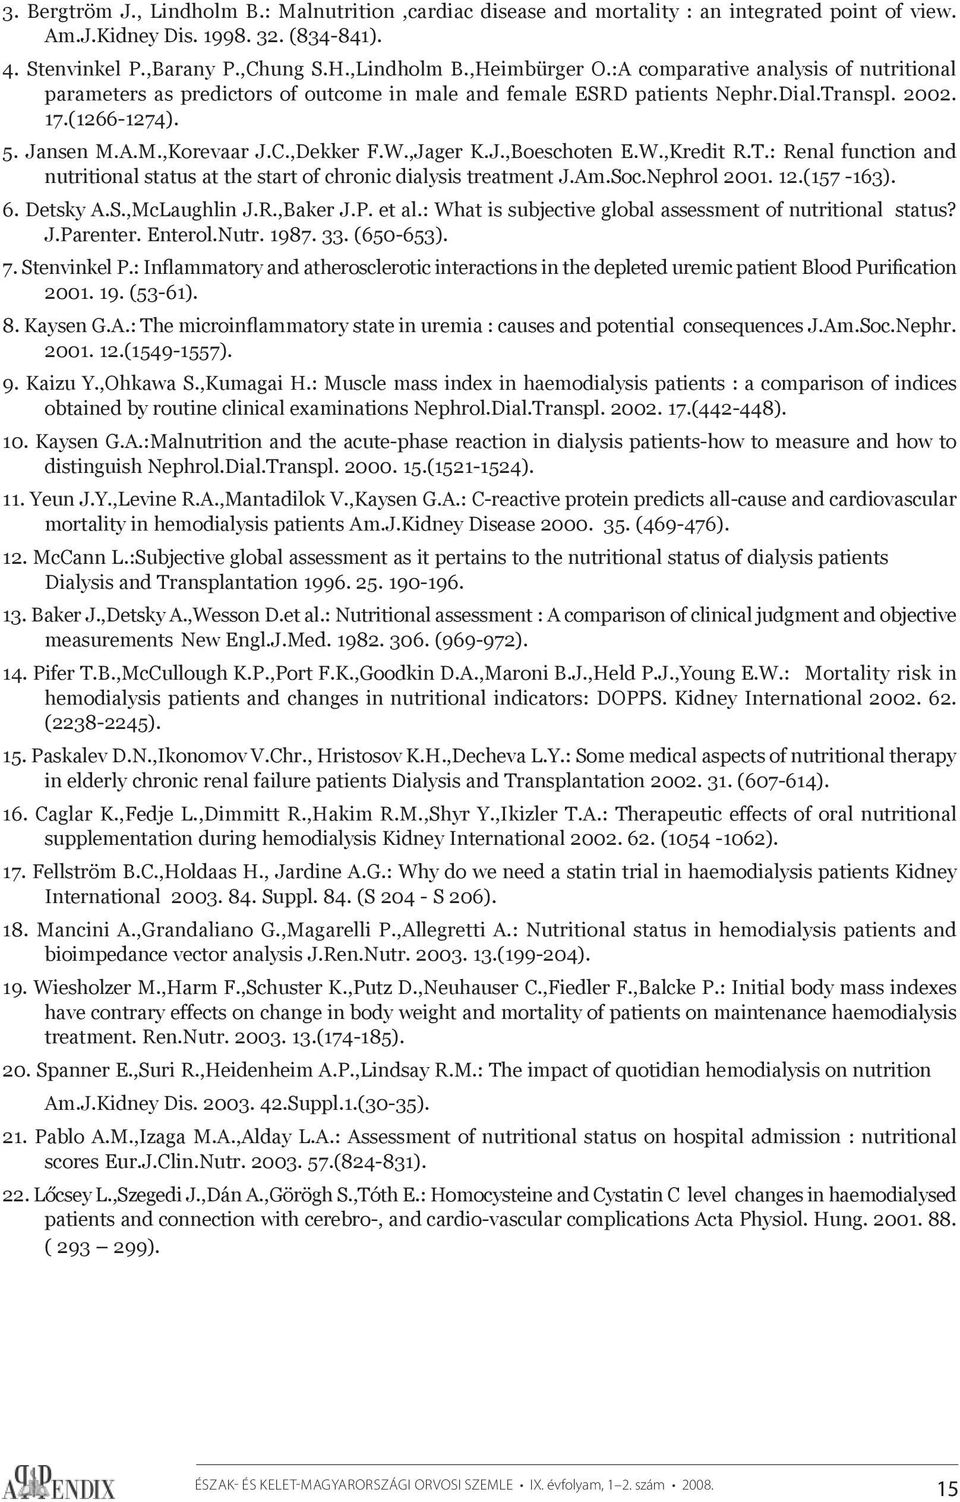 ,Dekker F.W.,Jager K.J.,Boeschoten E.W.,Kredit R.T.: Renal function and nutritional status at the start of chronic dialysis treatment J.Am.Soc.Nephrol 2001. 12.(157-163). 6. Detsky A.S.,McLaughlin J.